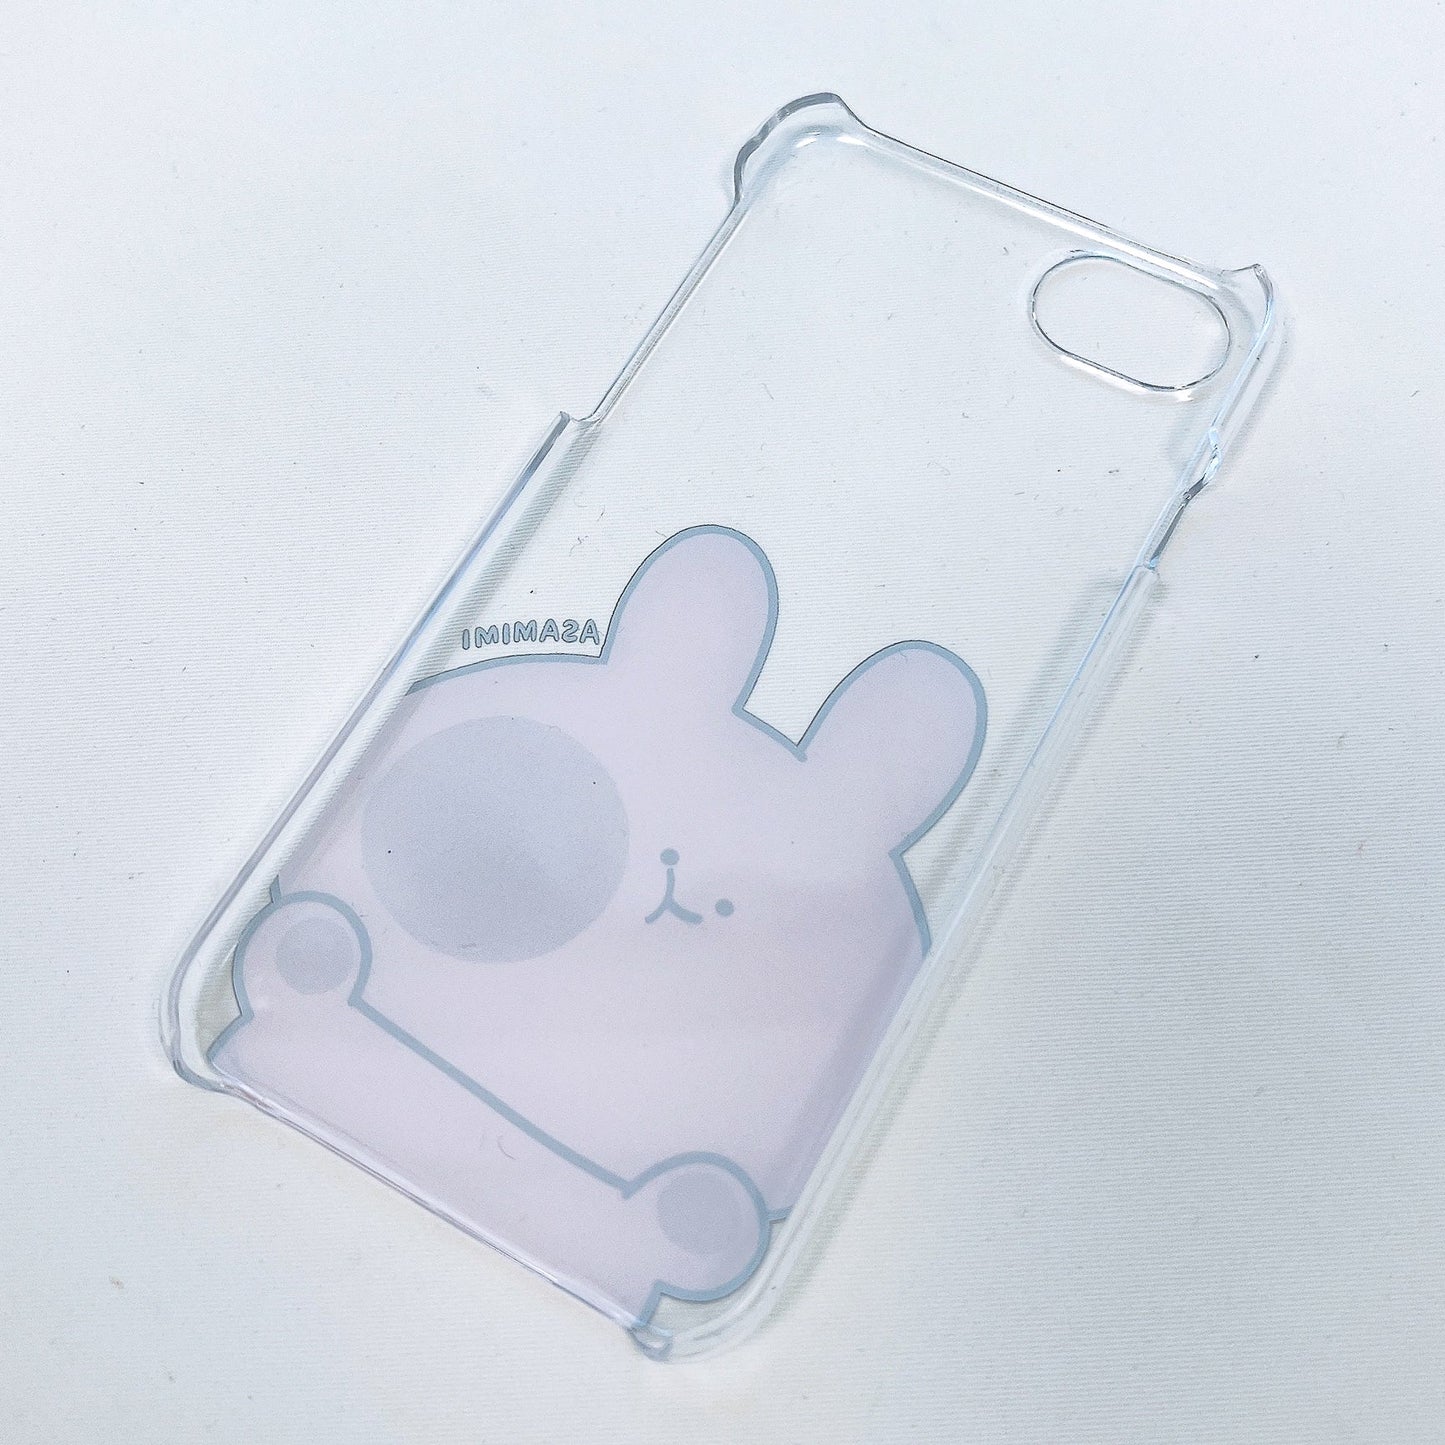 [Asamimi-chan] iPhone 11 Pro smartphone case (BASIC)